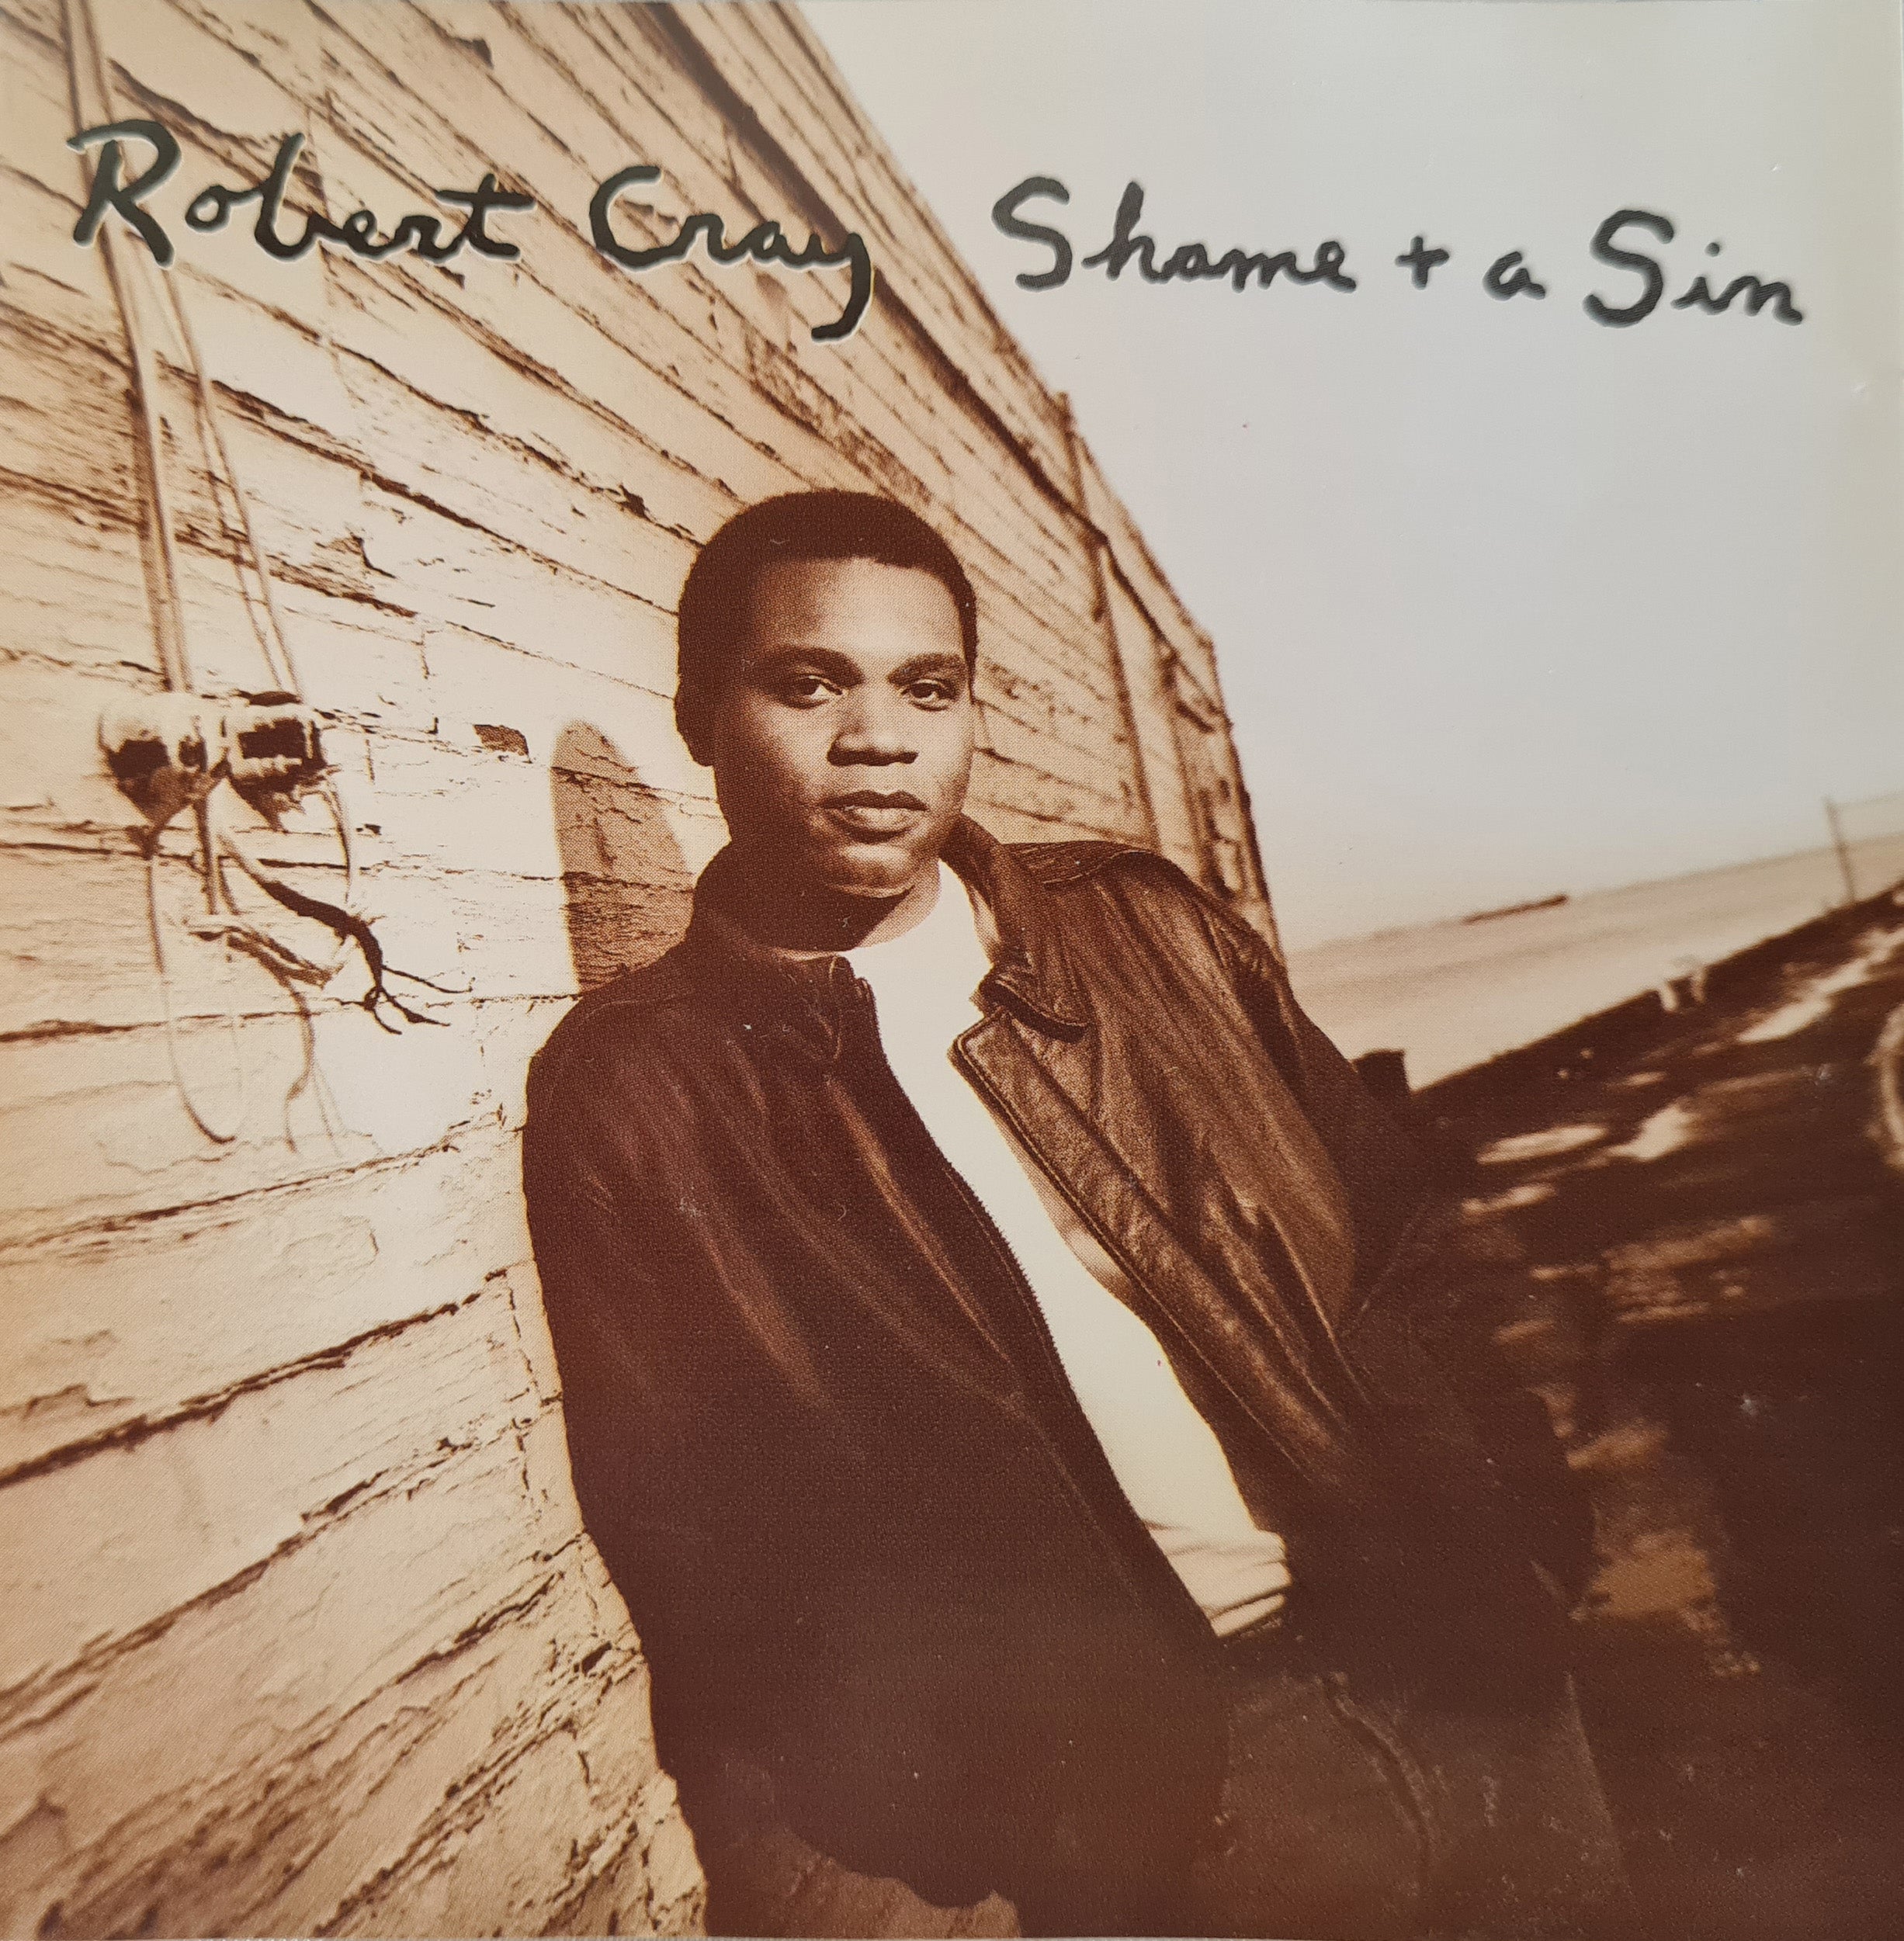 Robert Cray - Shame + a Sin (CD)